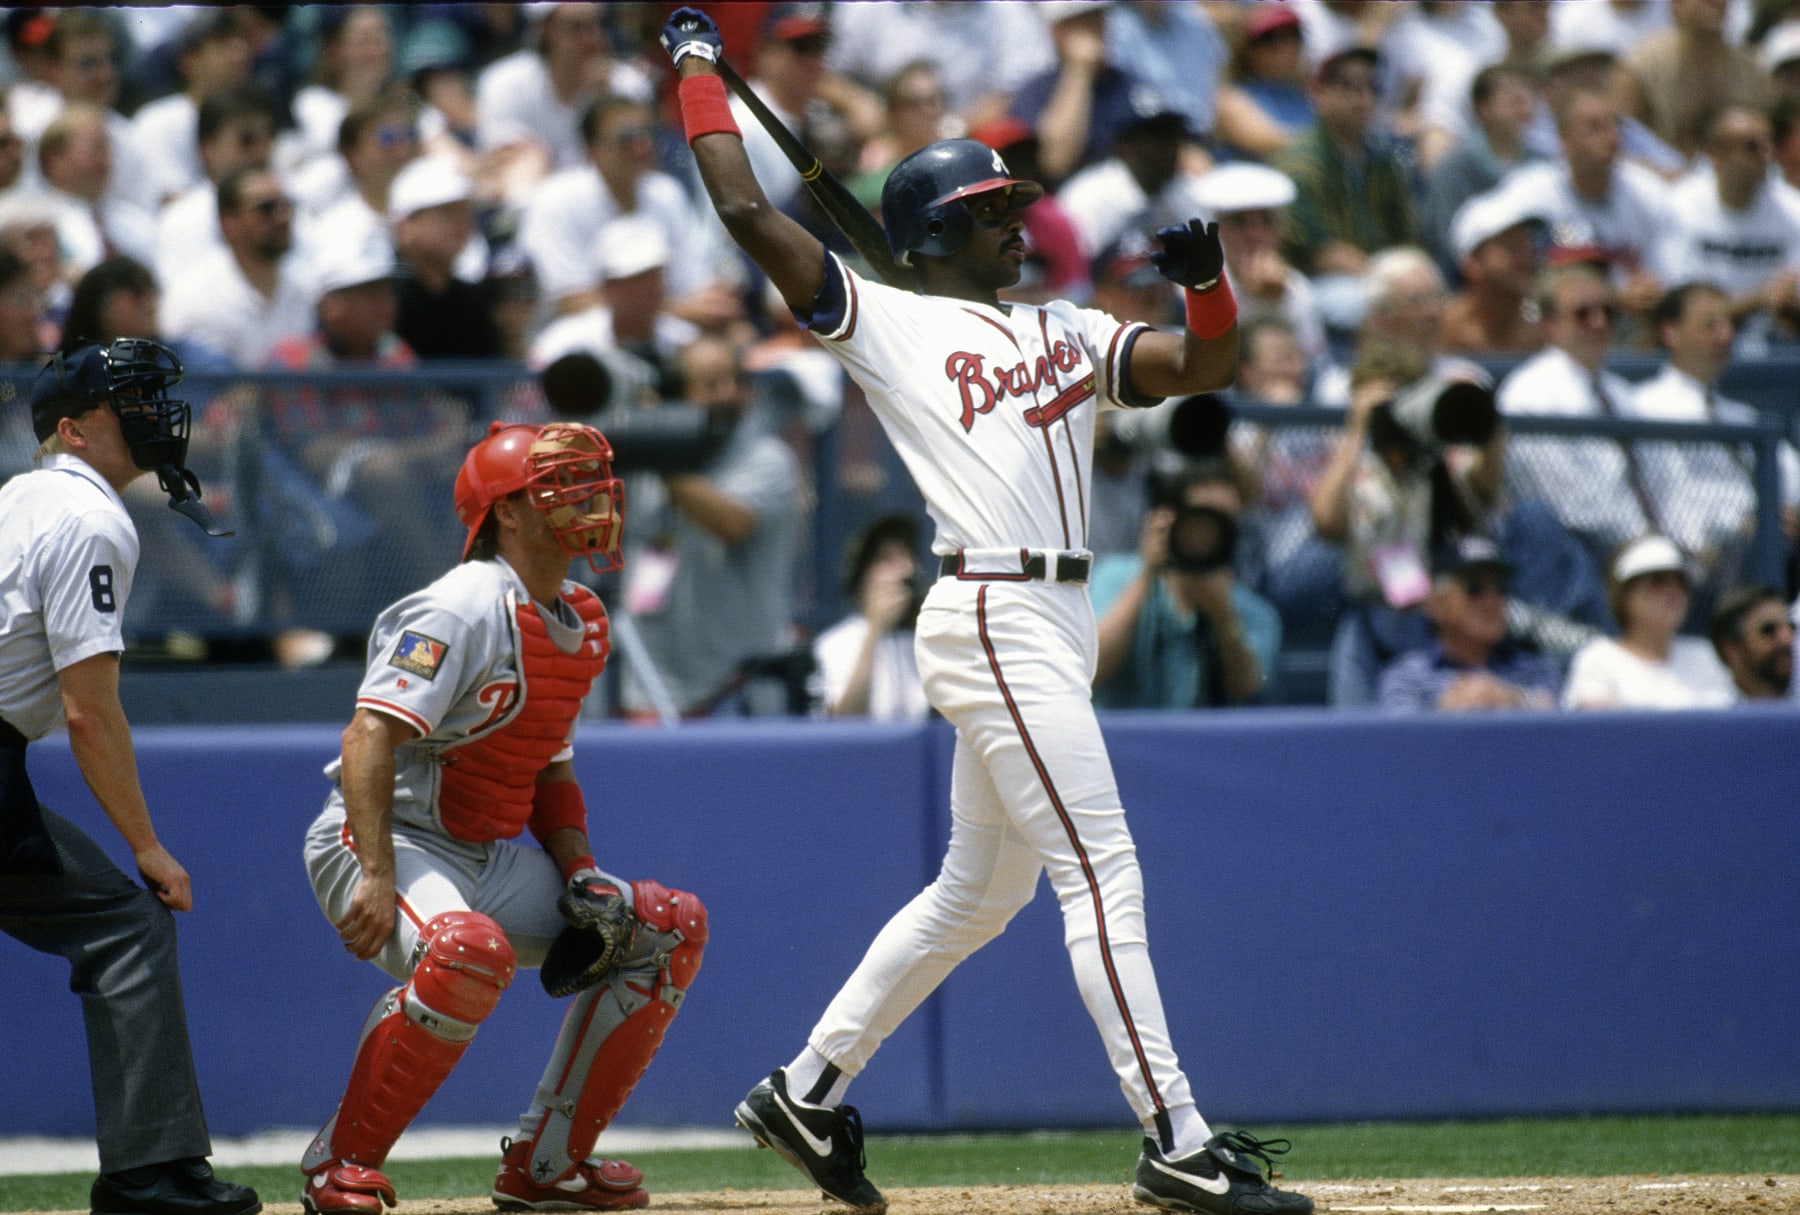 Fred Mcgriff Atlanta Braves 1995 Home Baseball Throwback 